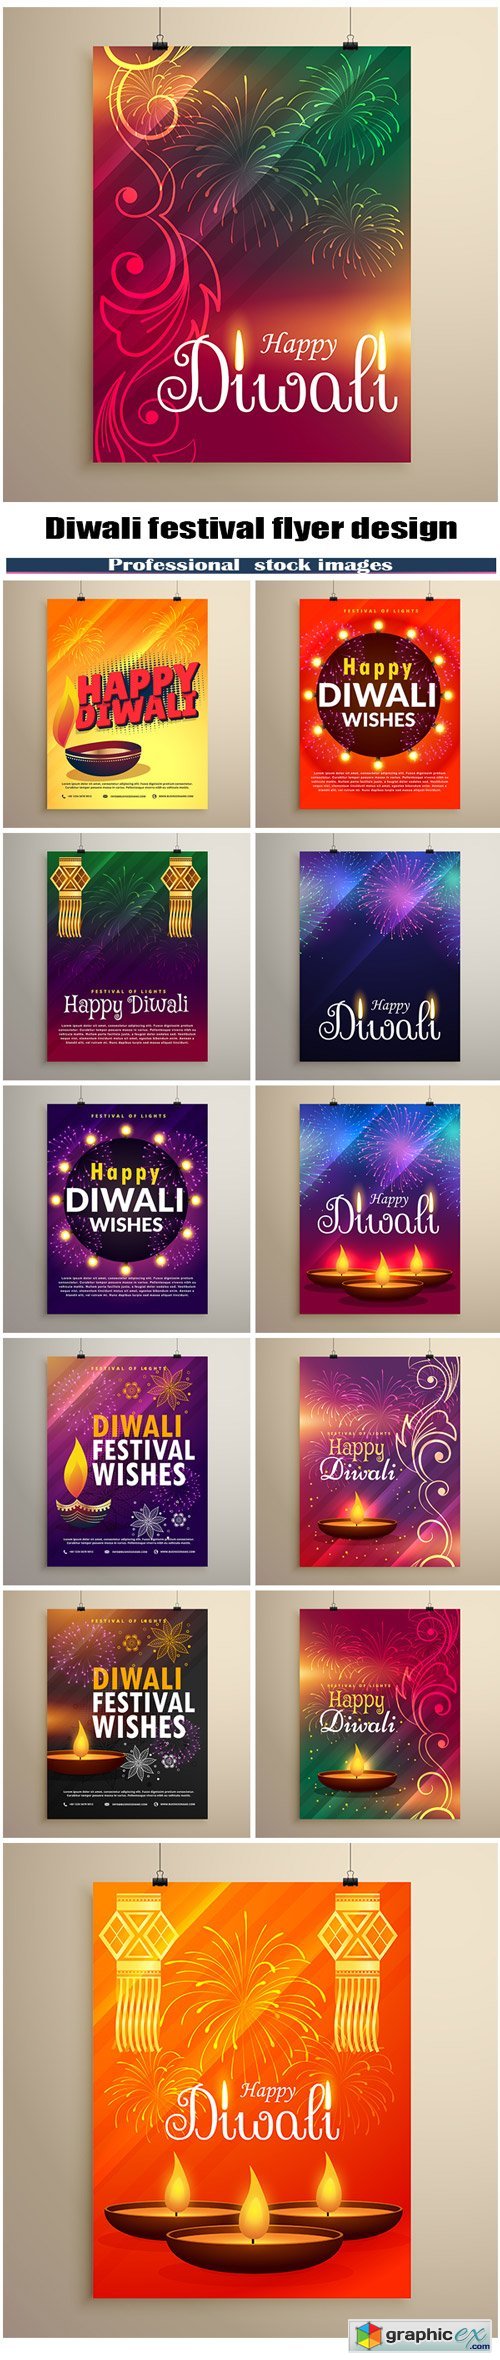 Diwali festival flyer design